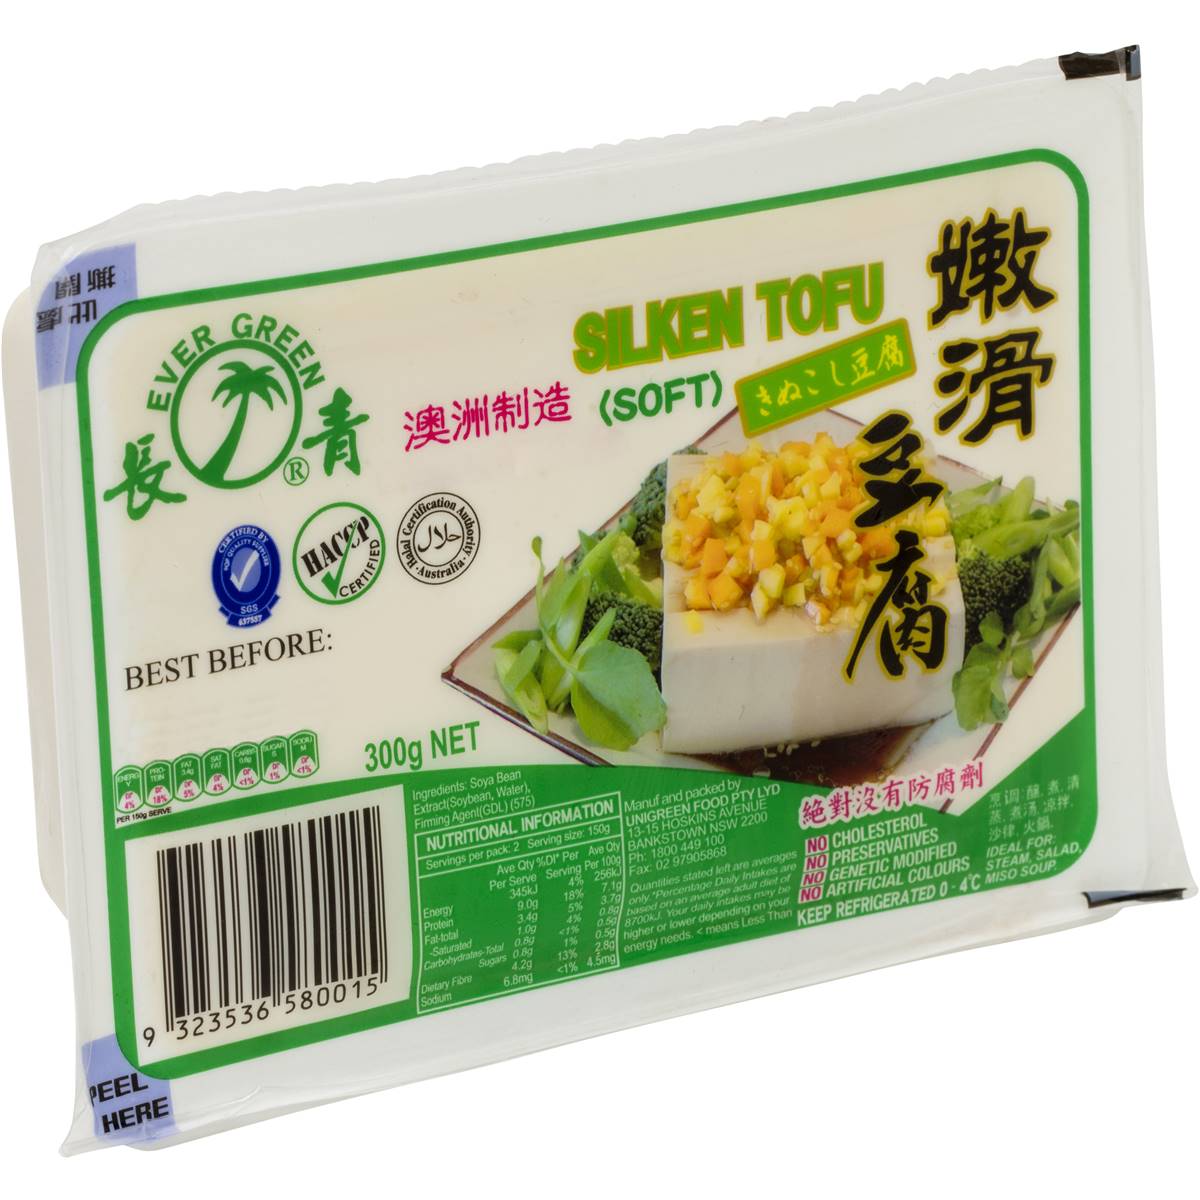 Calories in Evergreen Silken Tofu